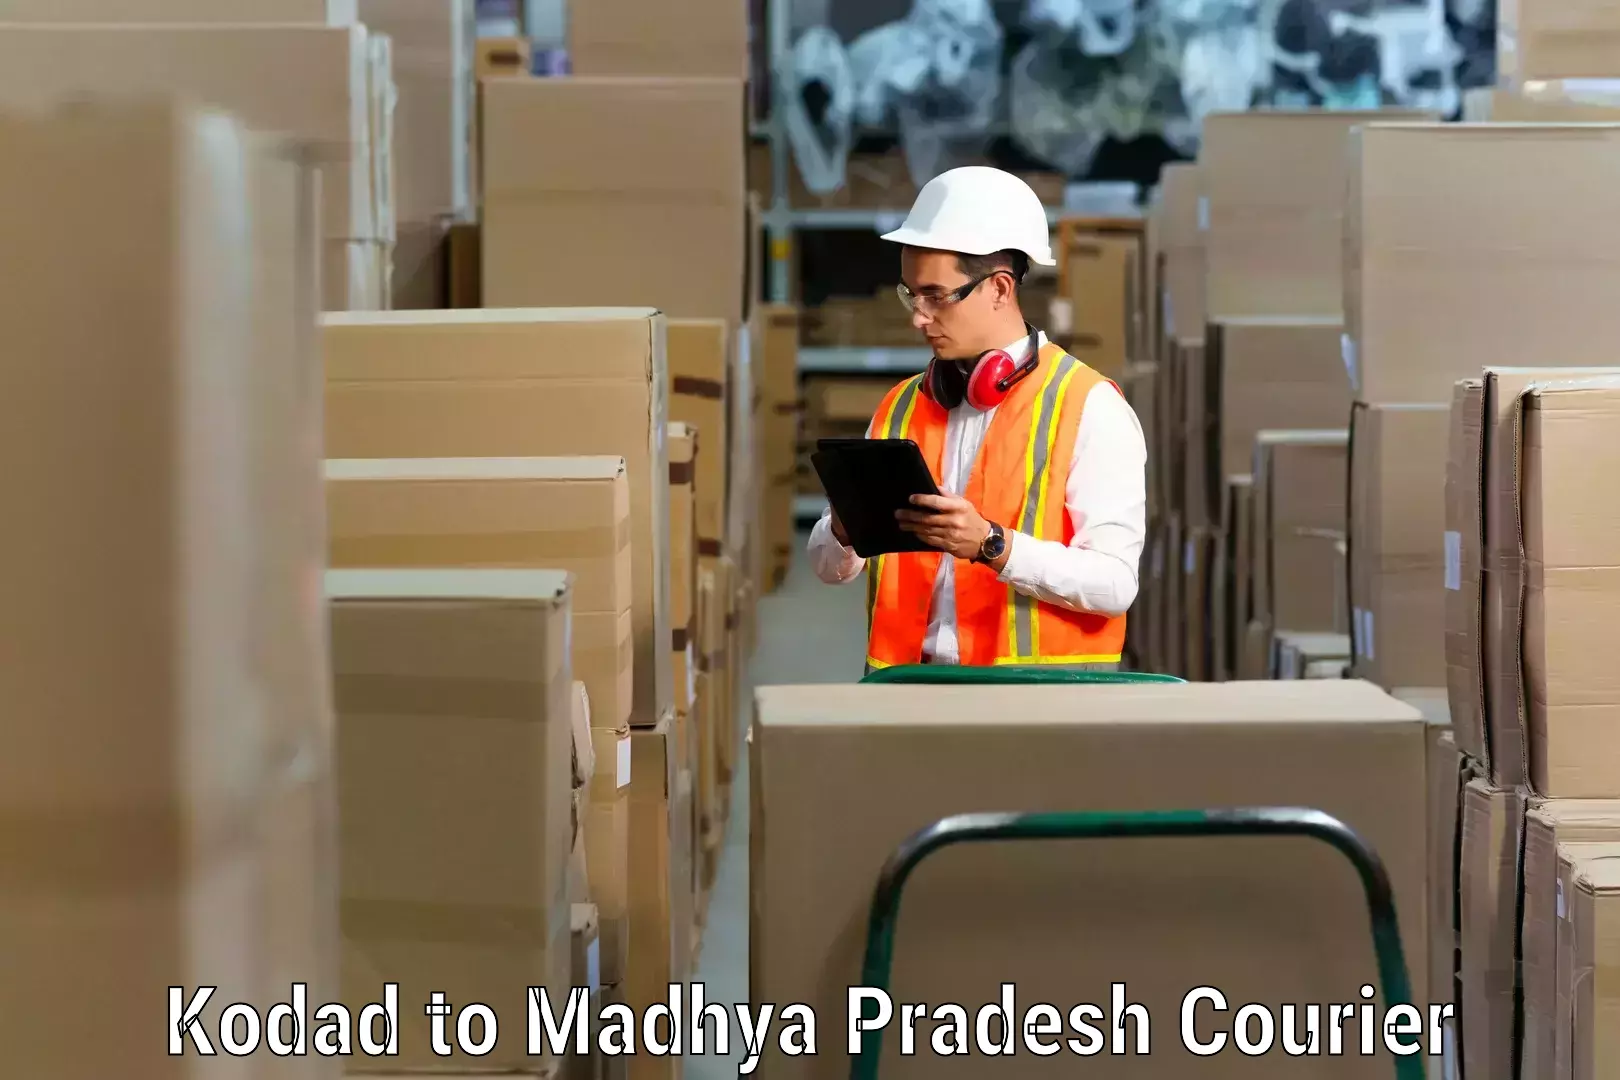 Furniture moving experts Kodad to Depalpur